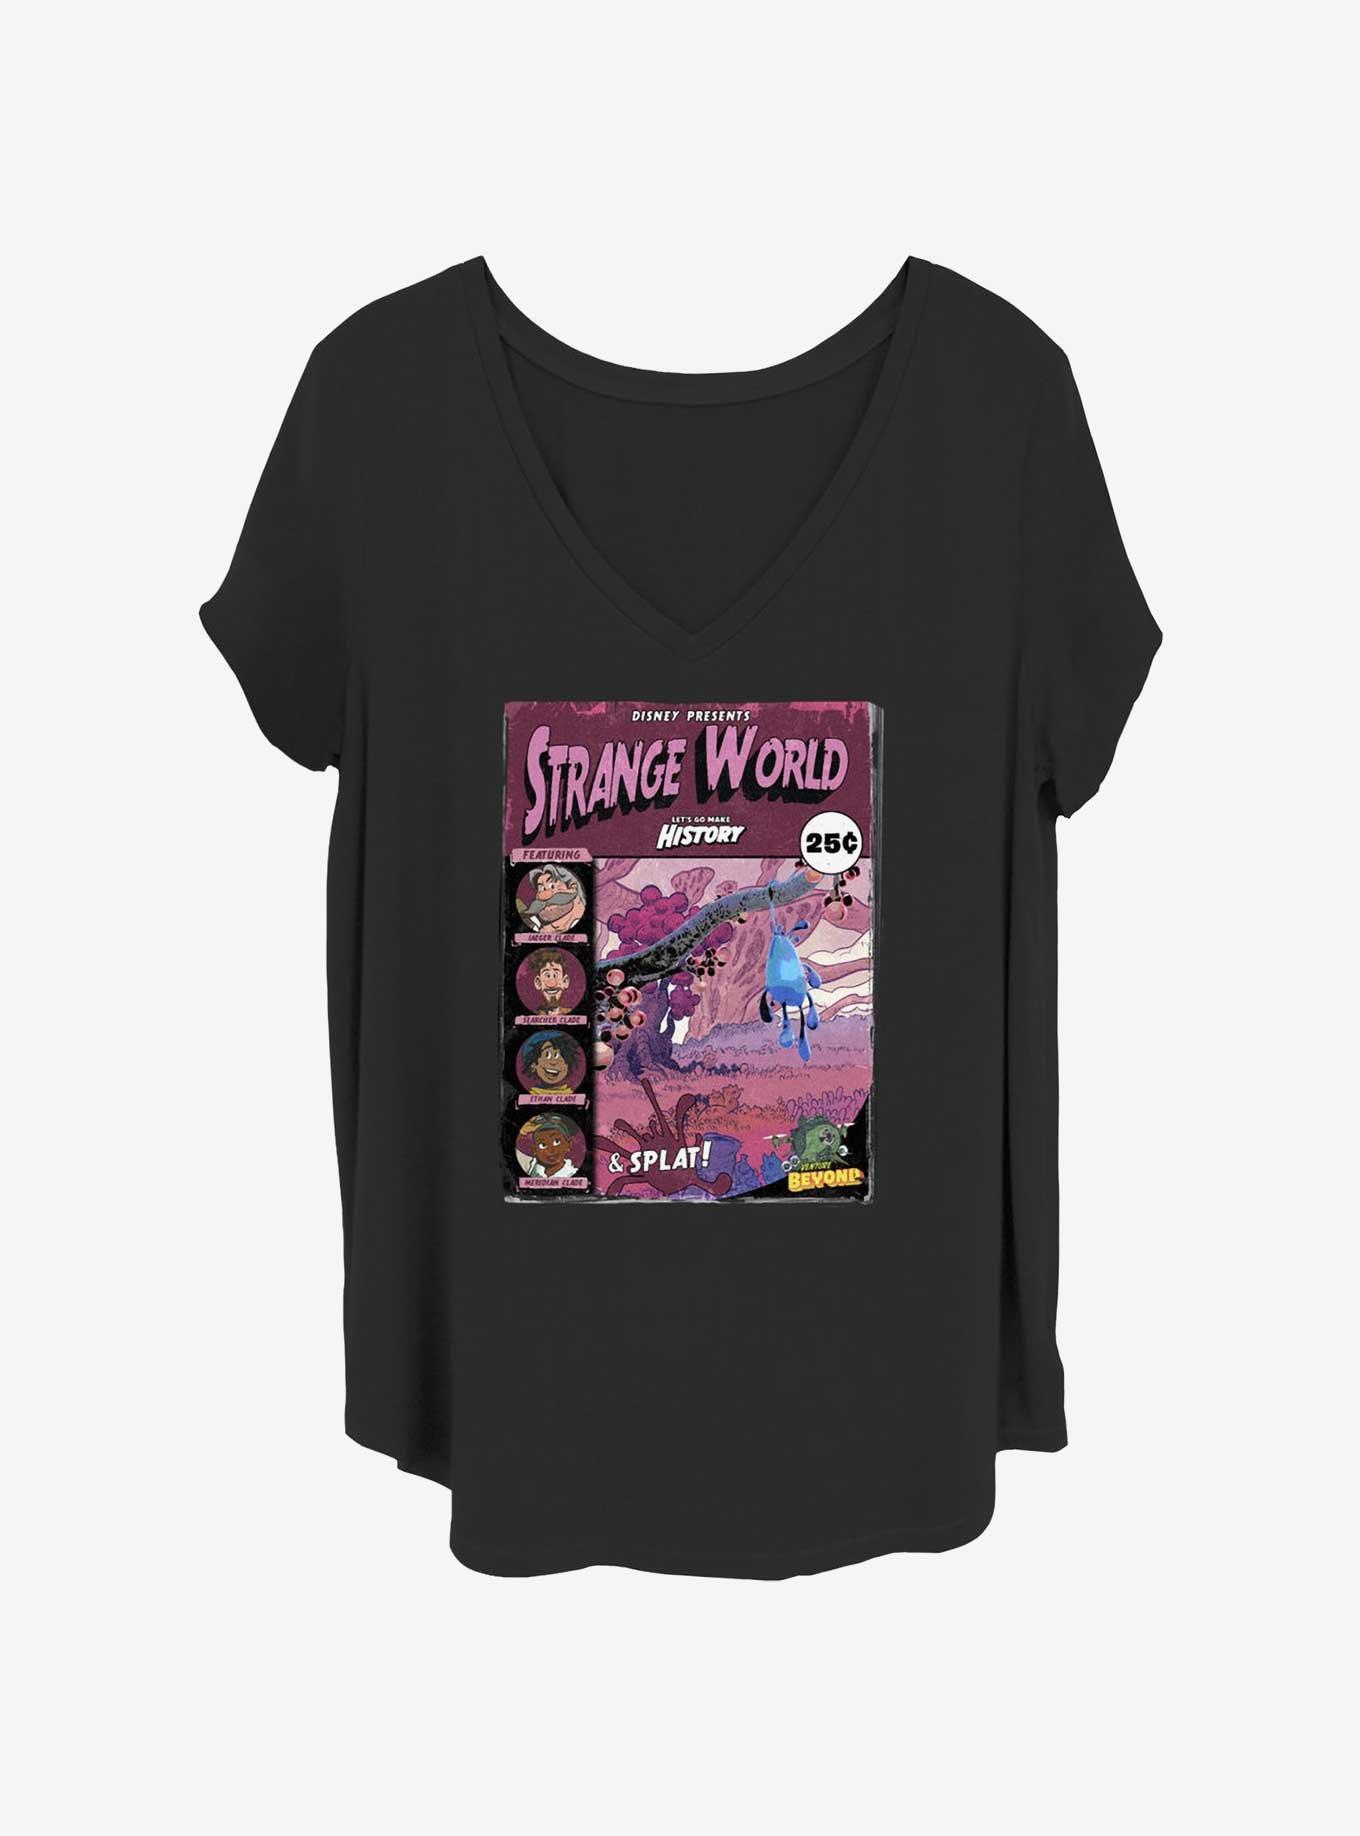 Disney Strange World Adventures Comic Cover Girls T-Shirt Plus